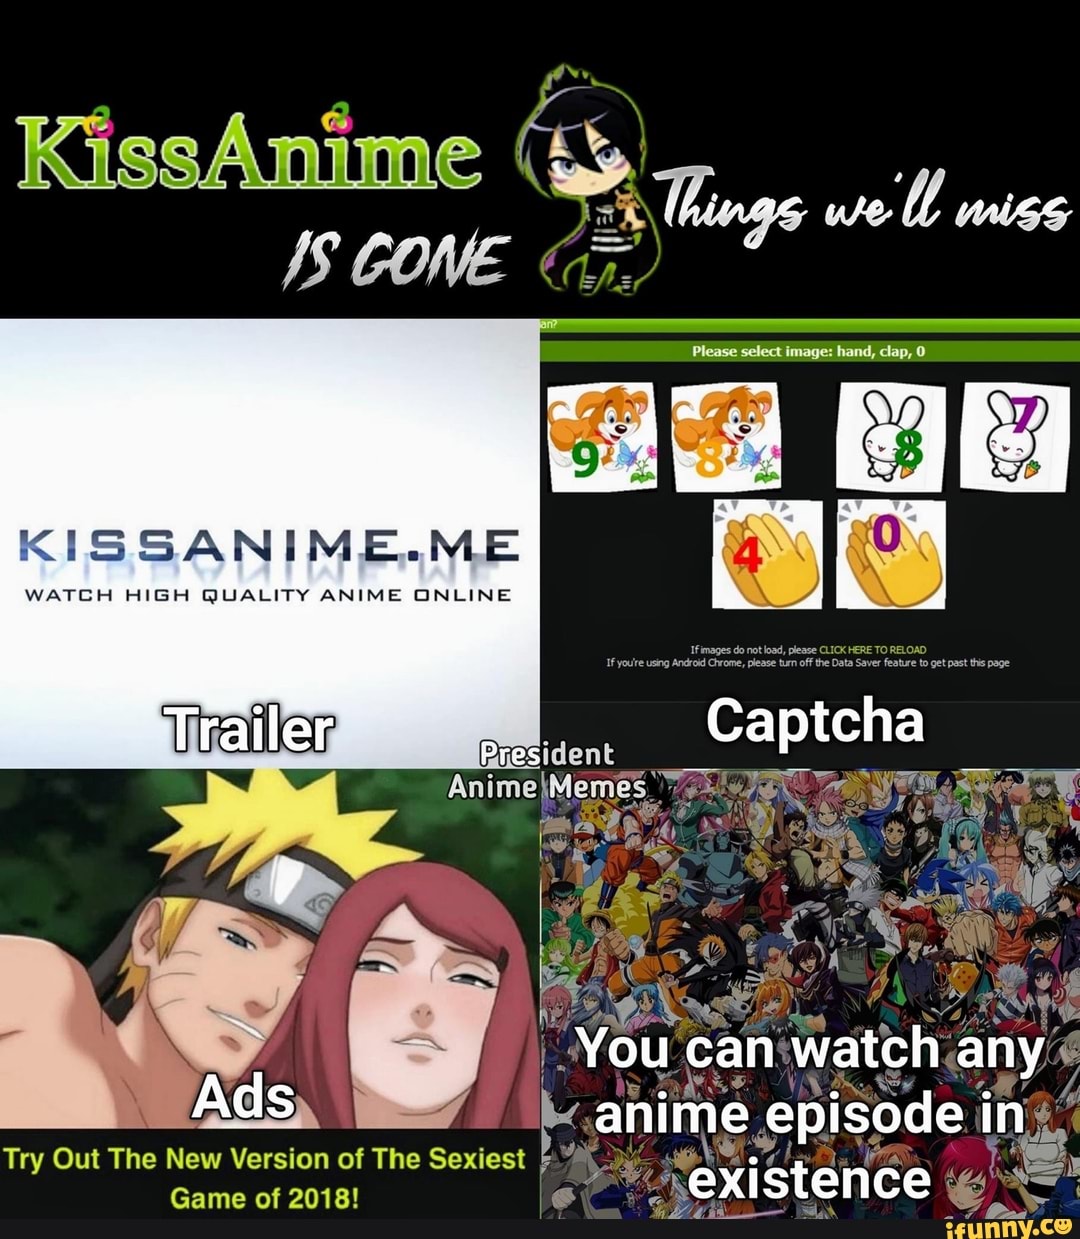 Trying to dodge kissanime viruses like : r/Animemes